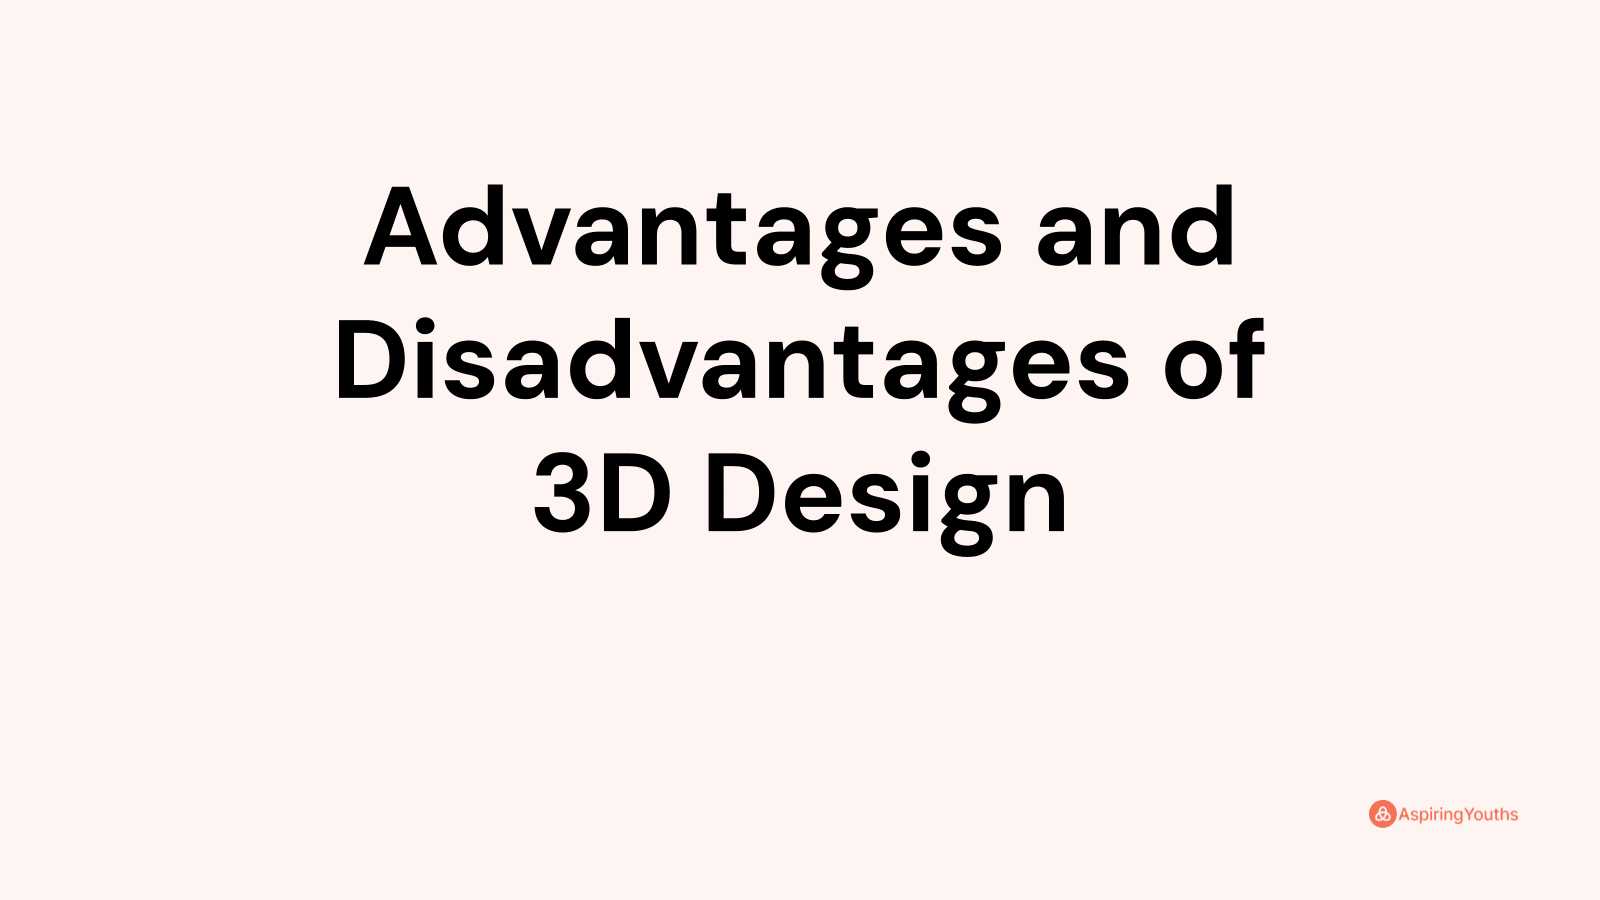 Advantages and disadvantages of 3D Design